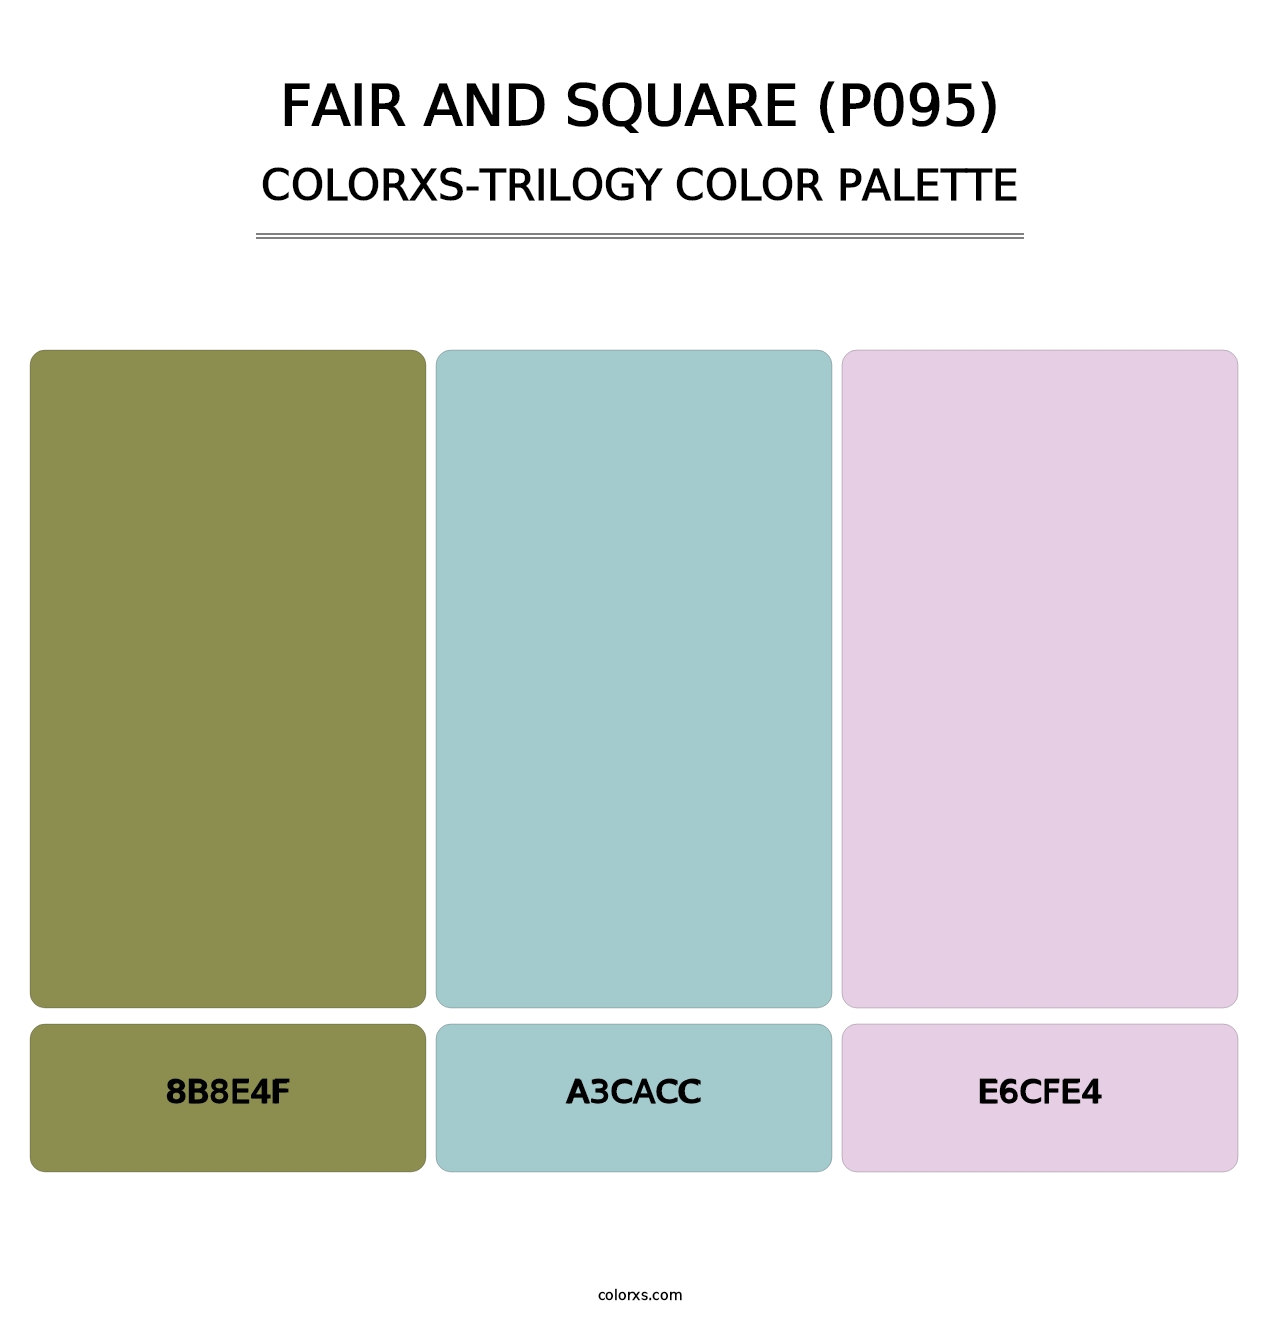 Fair and Square (P095) - Colorxs Trilogy Palette